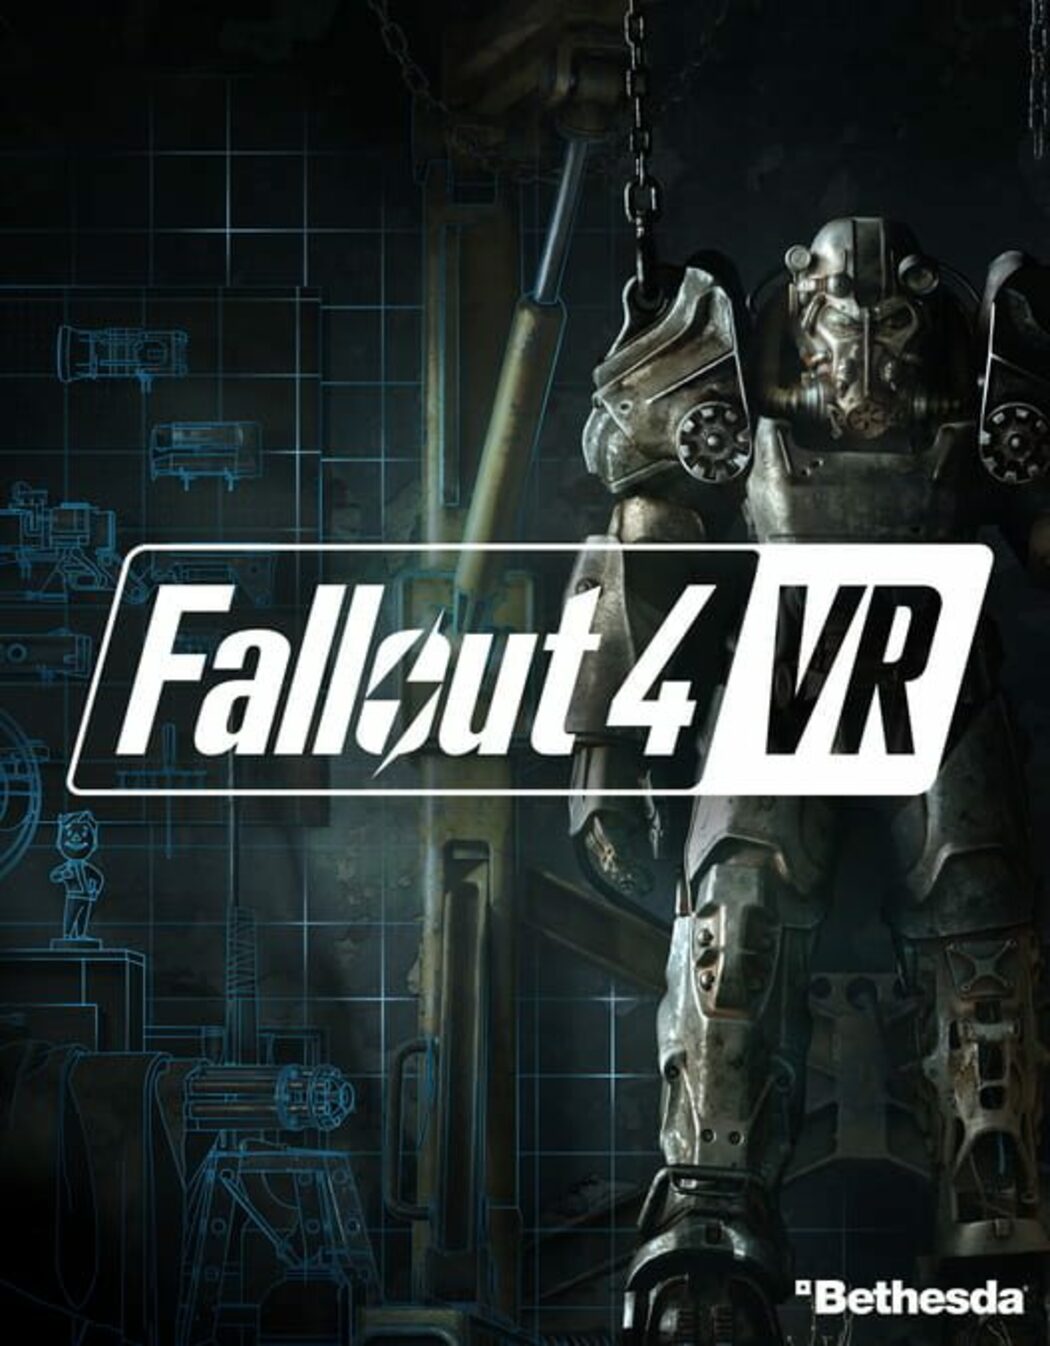 diamant ik heb het gevonden Misverstand Buy Fallout 4 VR CD key for PC at a Better Price! | ENEBA